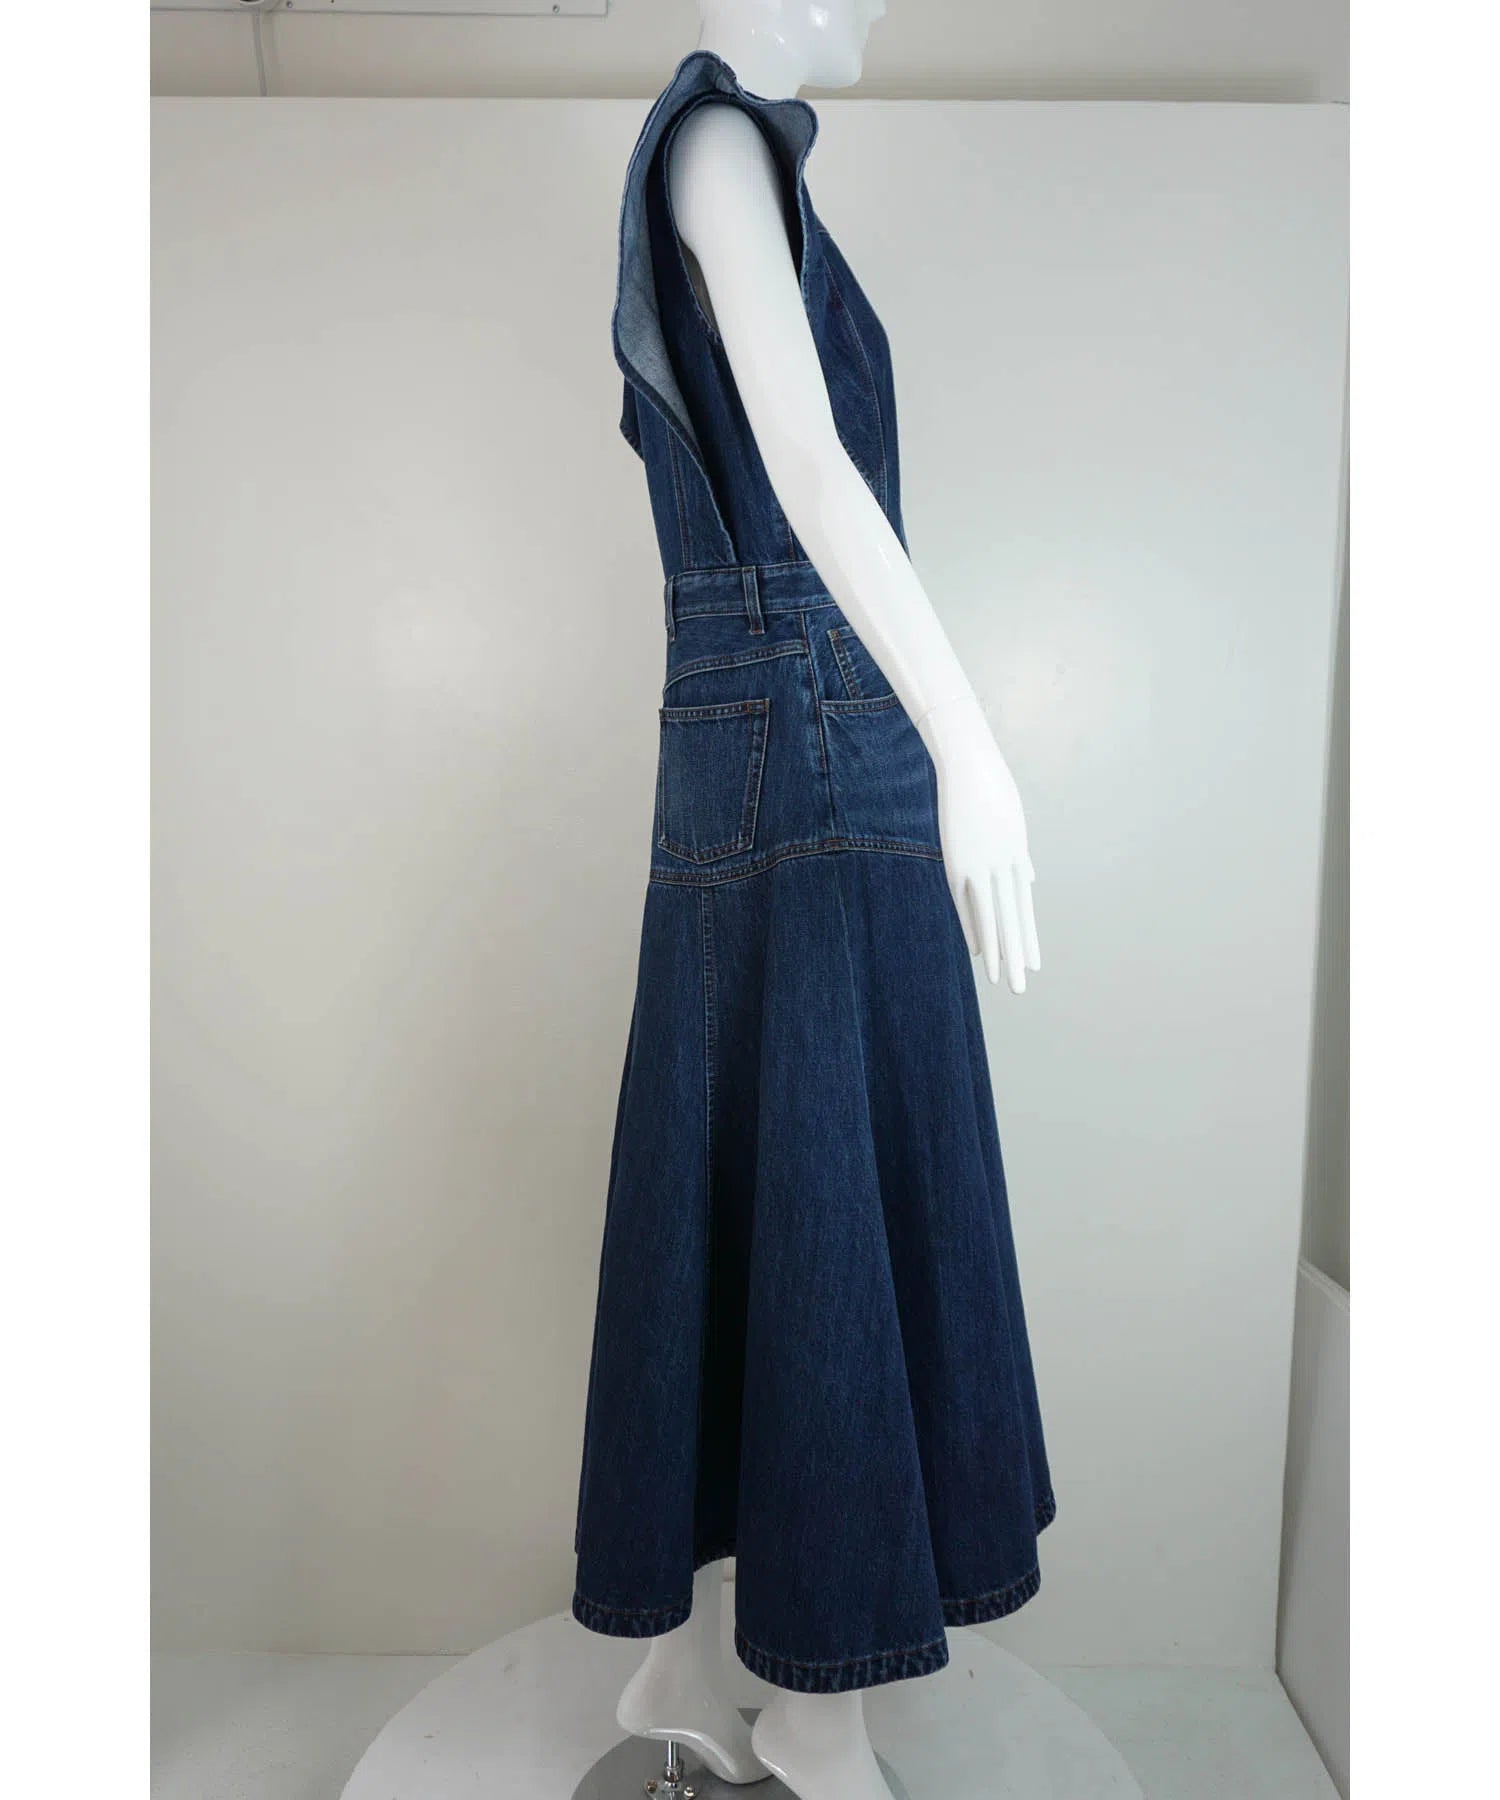 Chloe by Gabriella Hearst Blue Jean Midi Dress Spring 2022